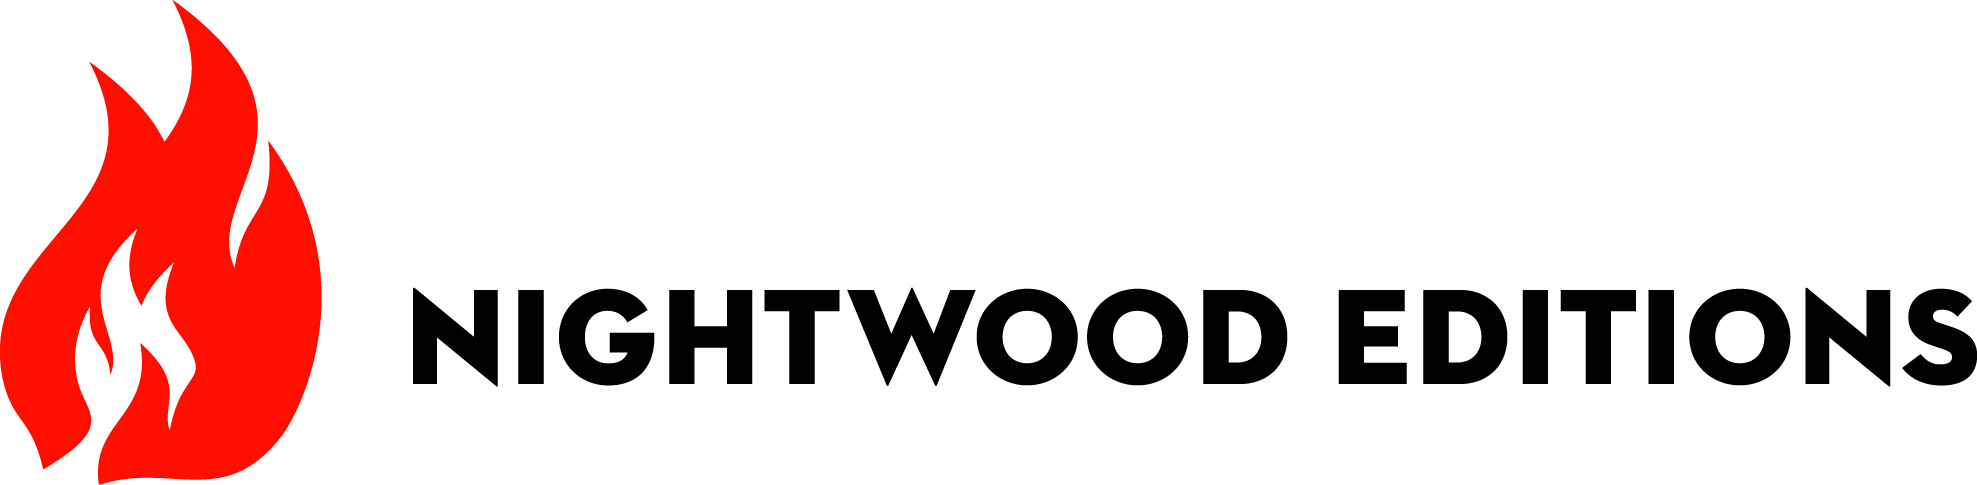 nightwood-cmyk_logo2-copy